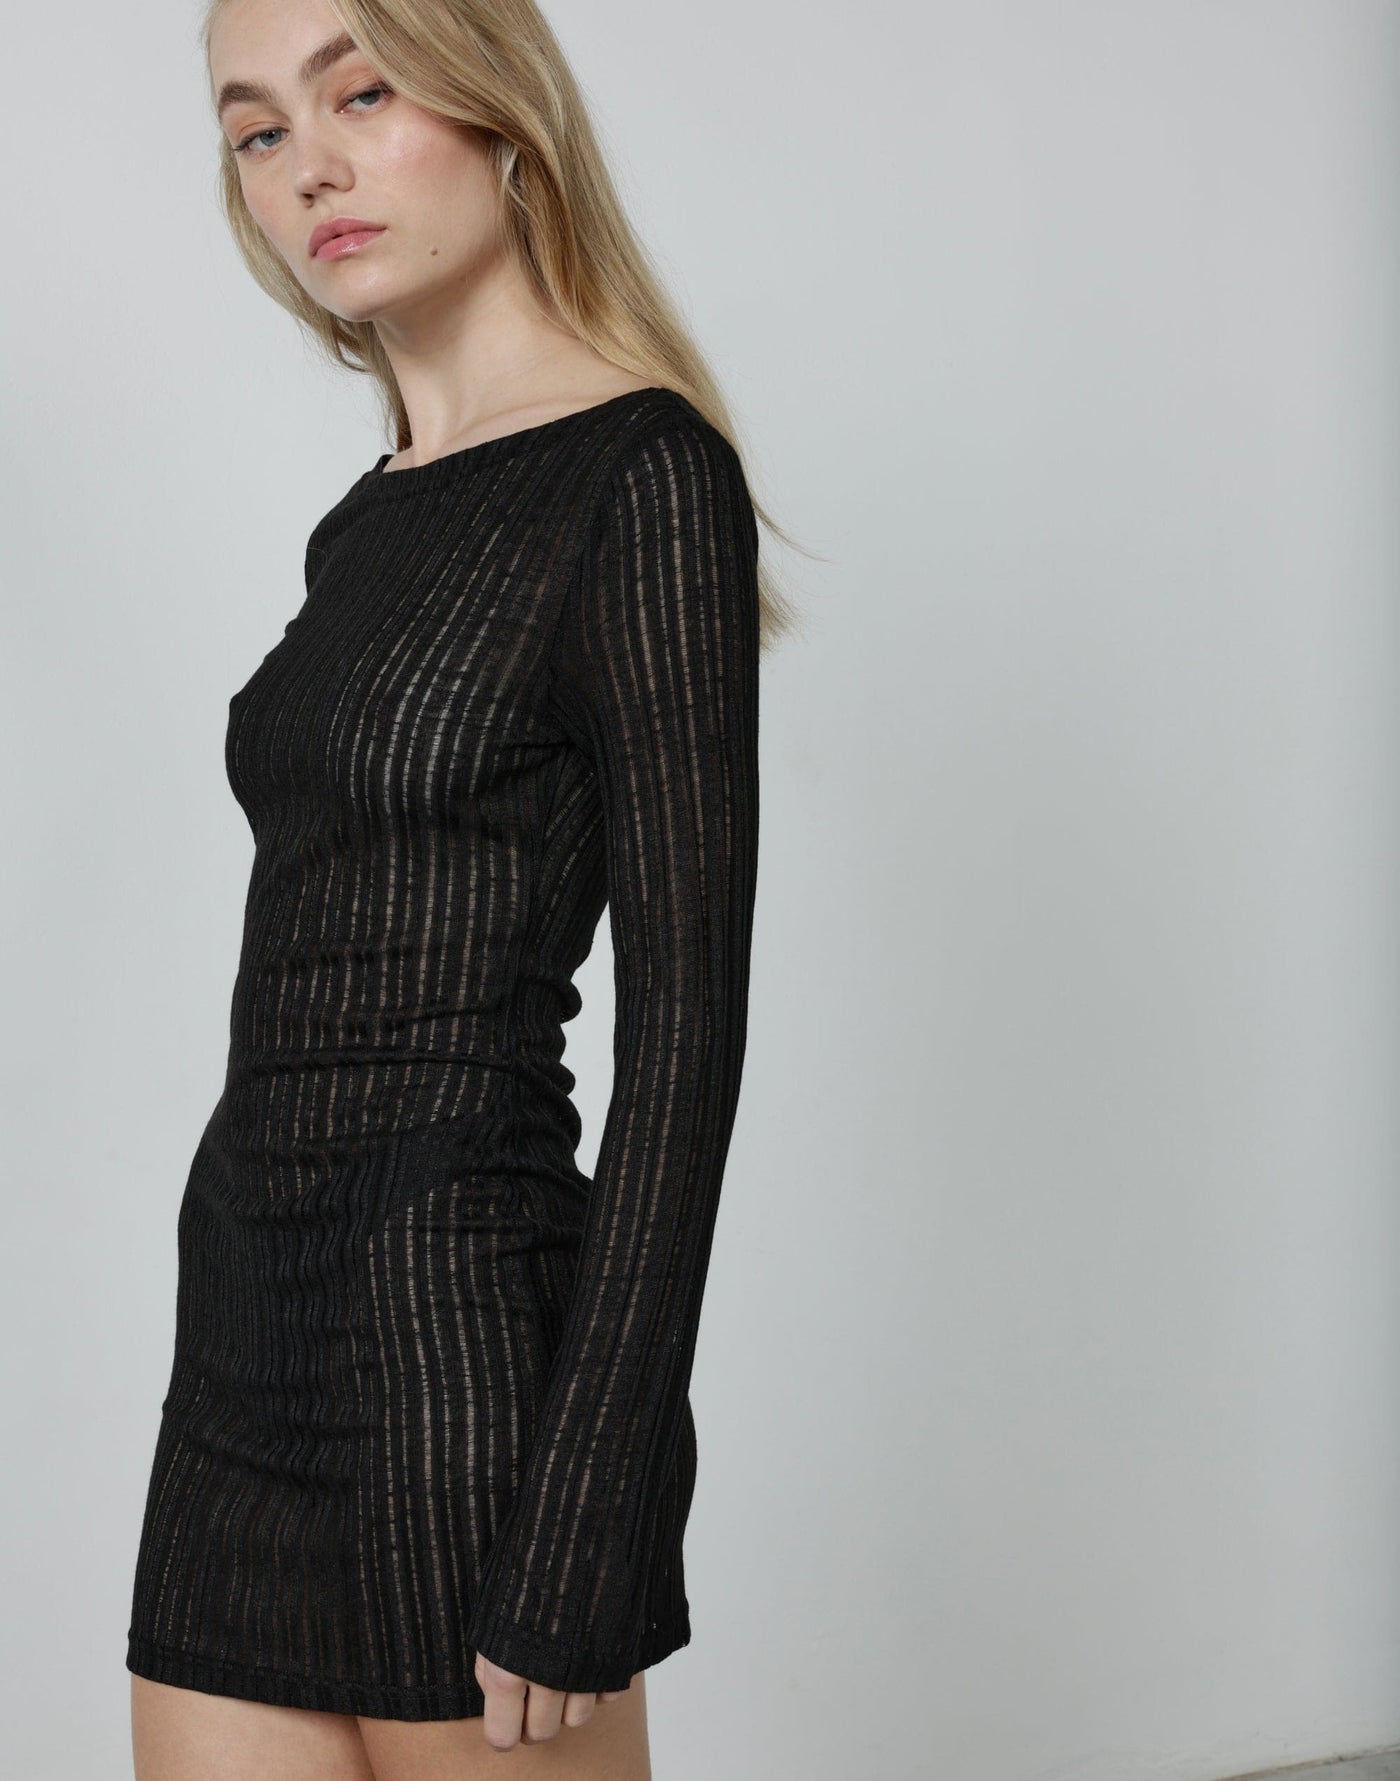 Harper Mini Dress (Black) - Sheer Knit Long Sleeve Mini Dress - Women's Dress - Charcoal Clothing